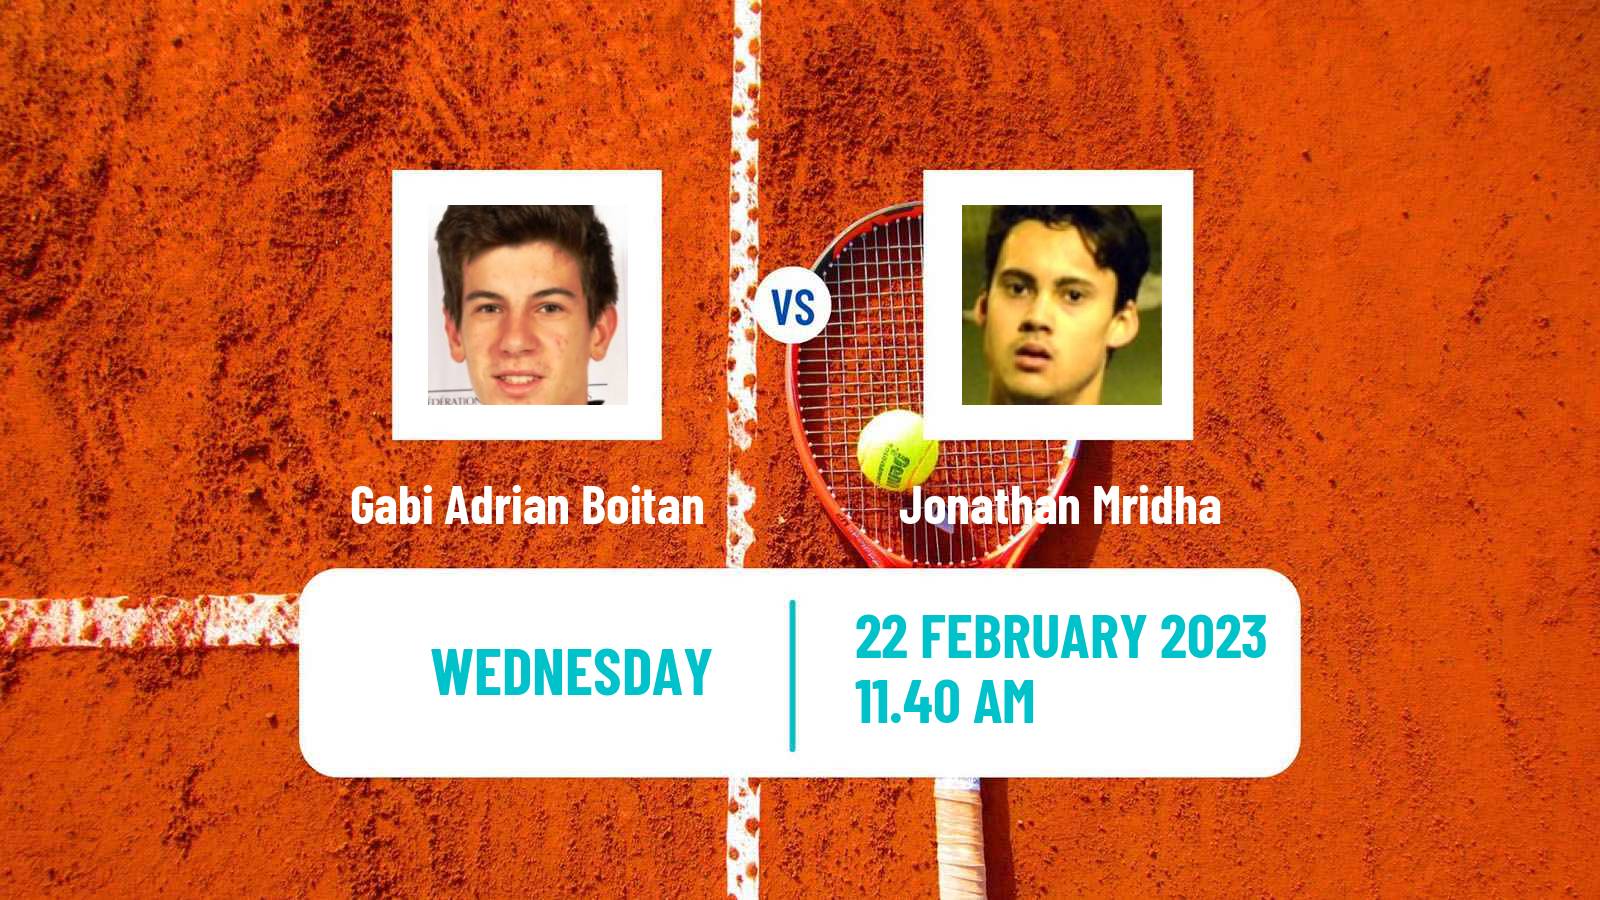 Tennis ITF Tournaments Gabi Adrian Boitan - Jonathan Mridha